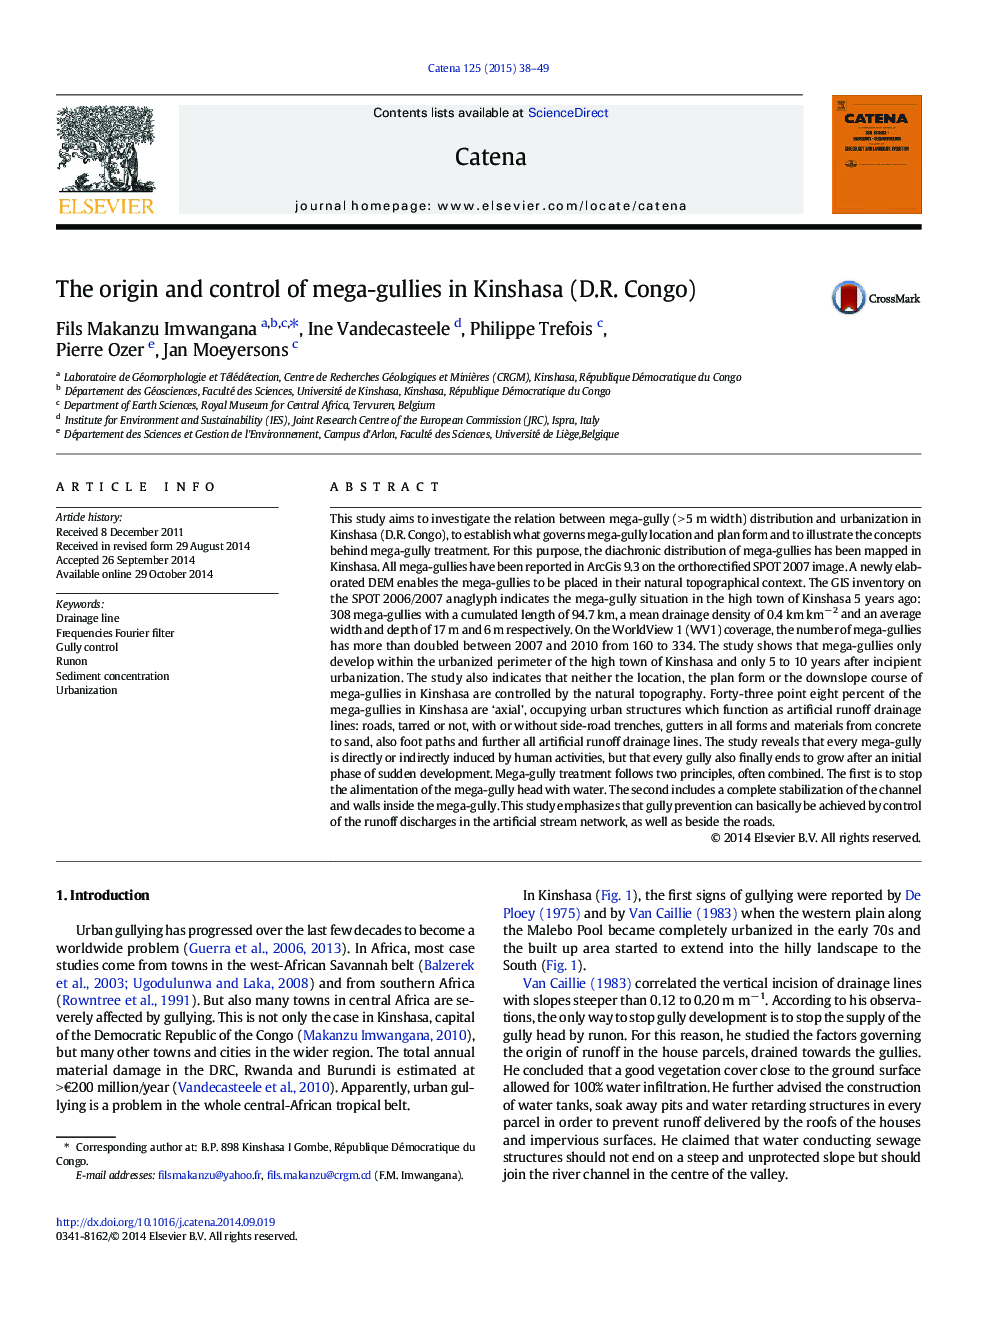 The origin and control of mega-gullies in Kinshasa (D.R. Congo)